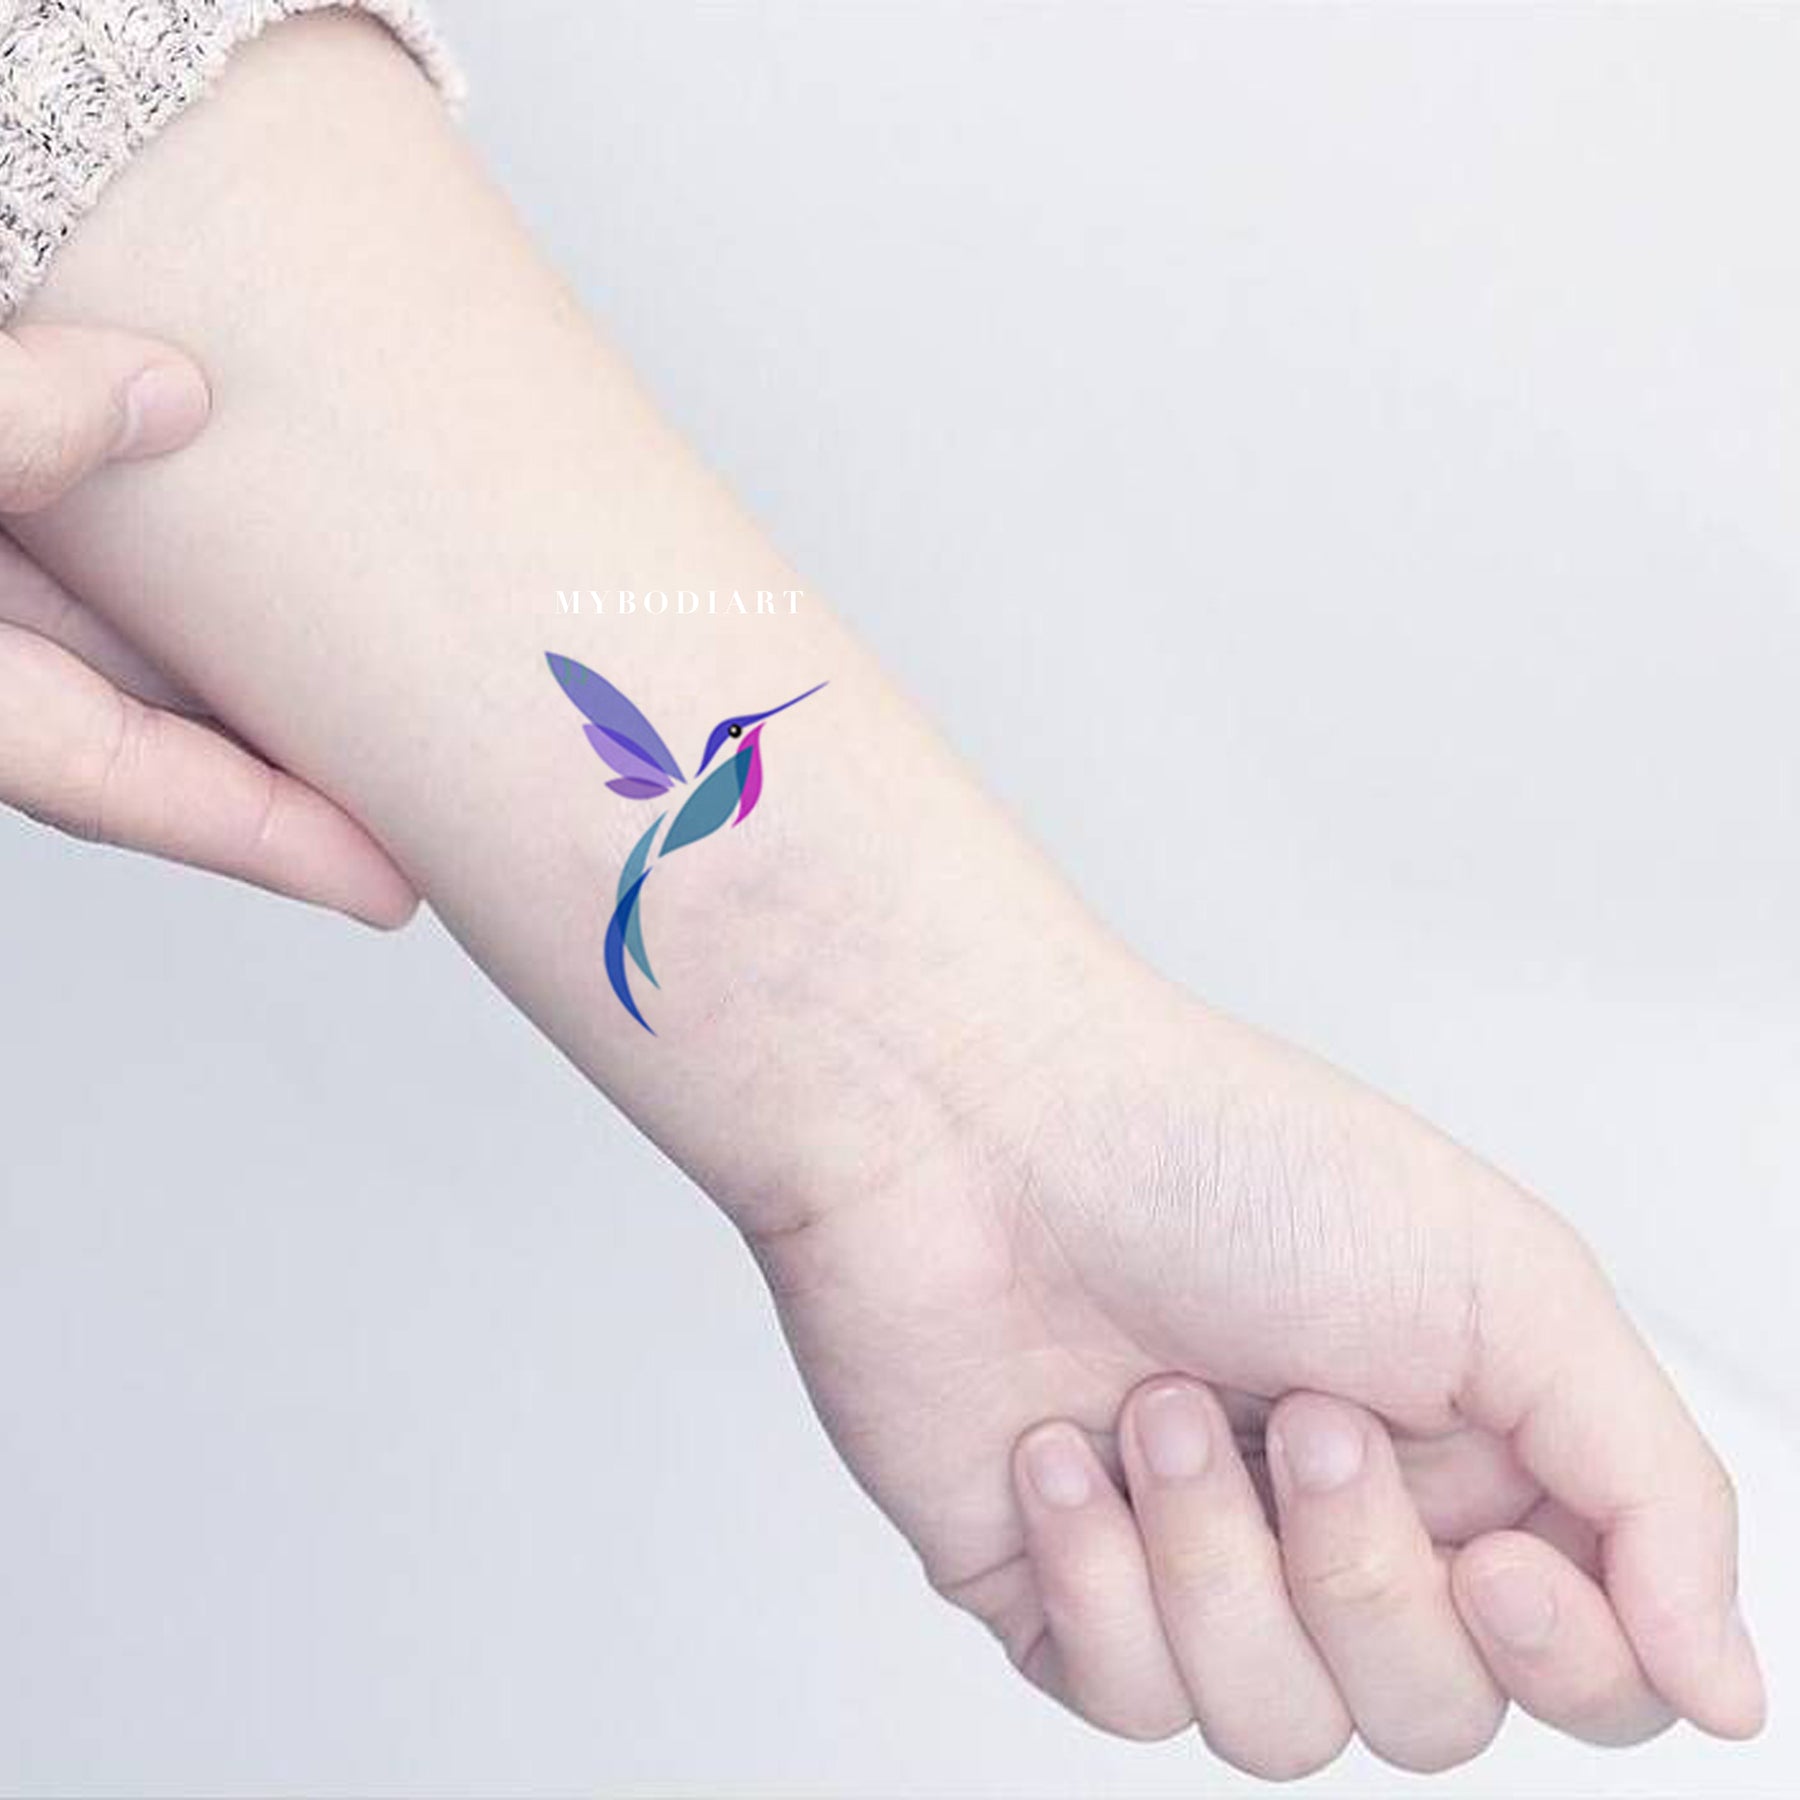 125 Hummingbird Tattoo Ideas You Need to Check Out  Wild Tattoo Art